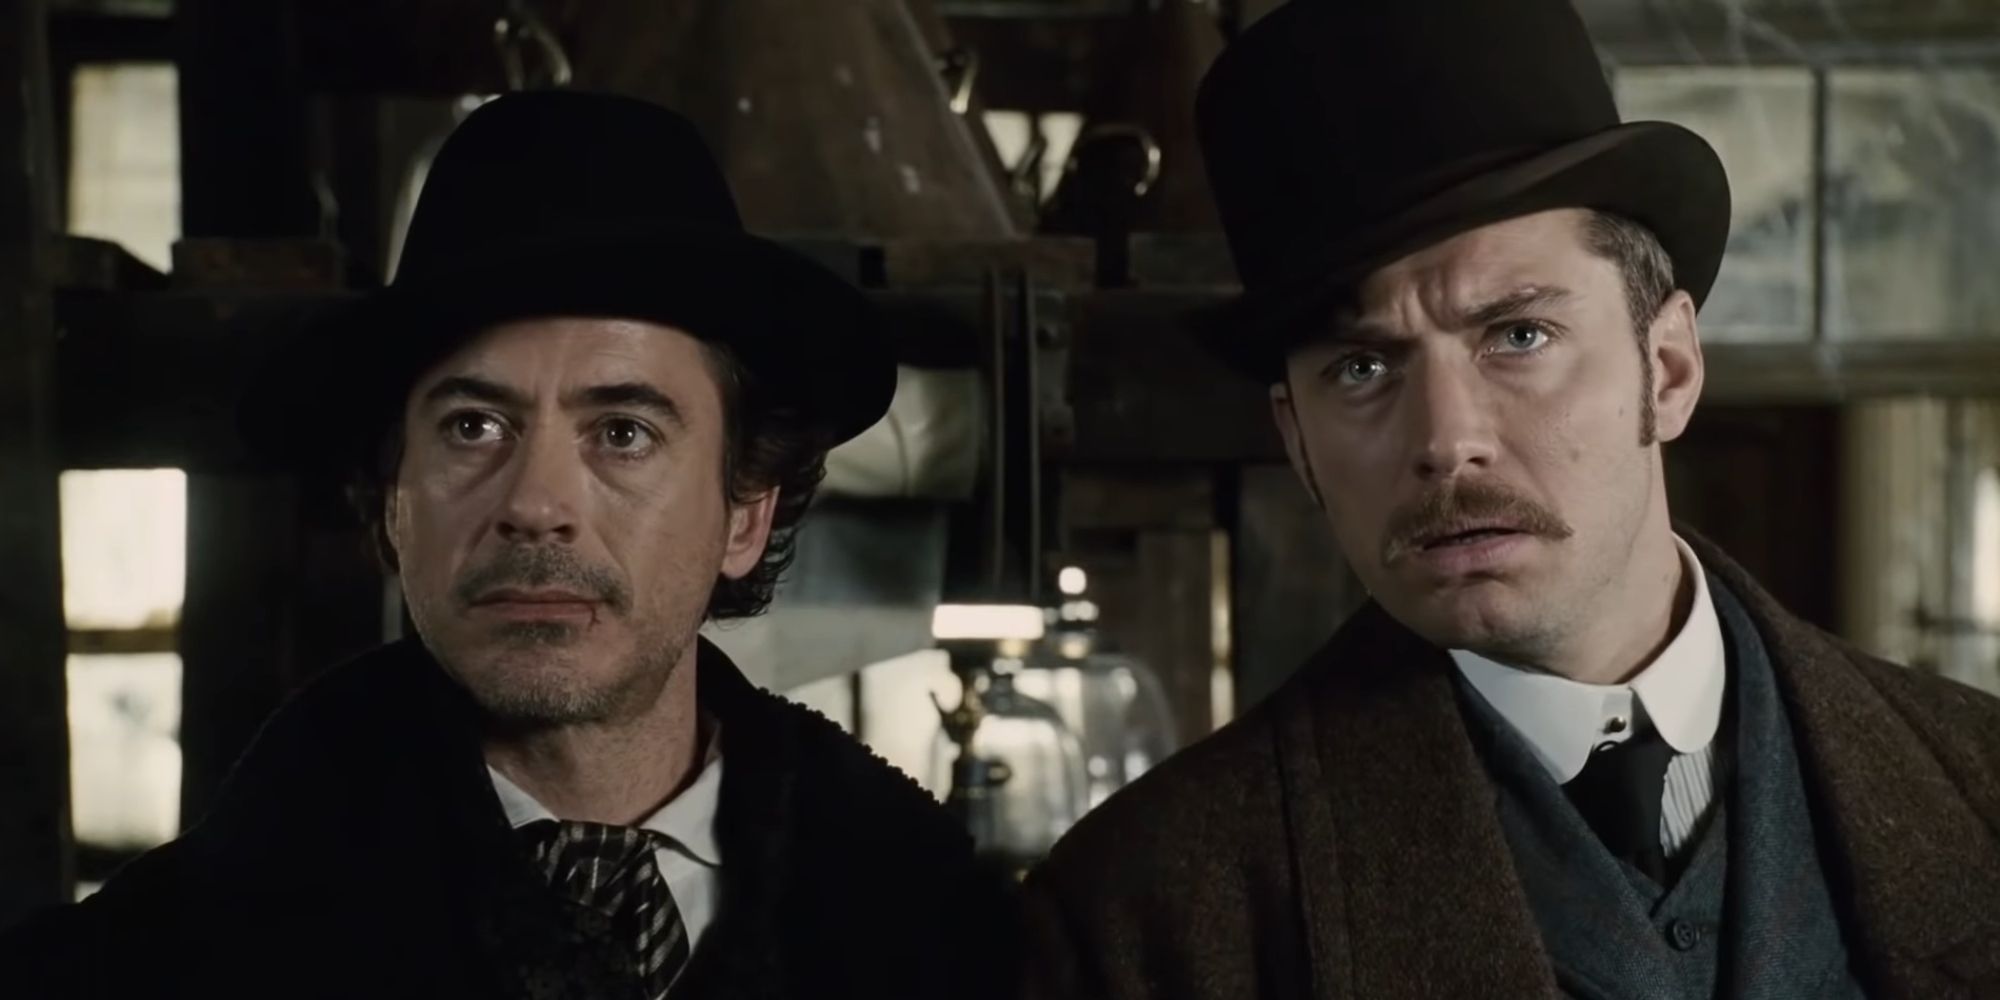 Robert Downey Jr. as Holmes and Jude Law as John Watson in Sherlock Holmes 2009